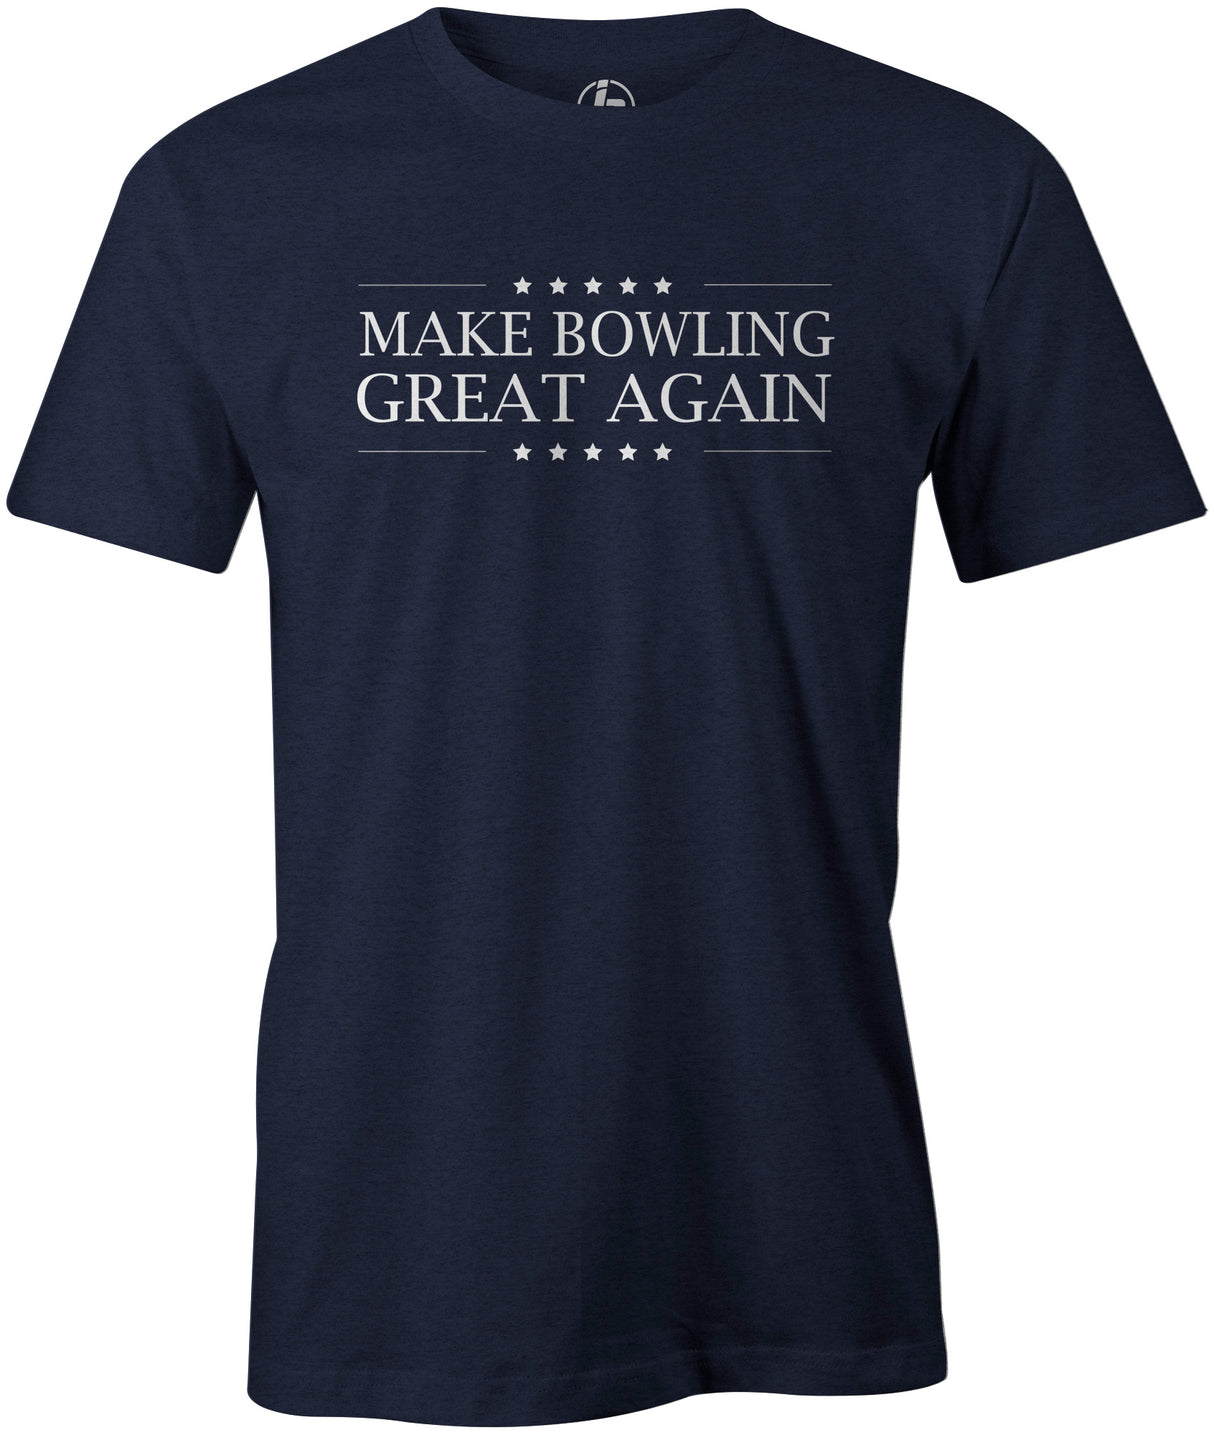 Make Bowling Great Again Men's Shirt, Navy, Cool shirt, funny, t-shirt, tee, tee-shirt, trump